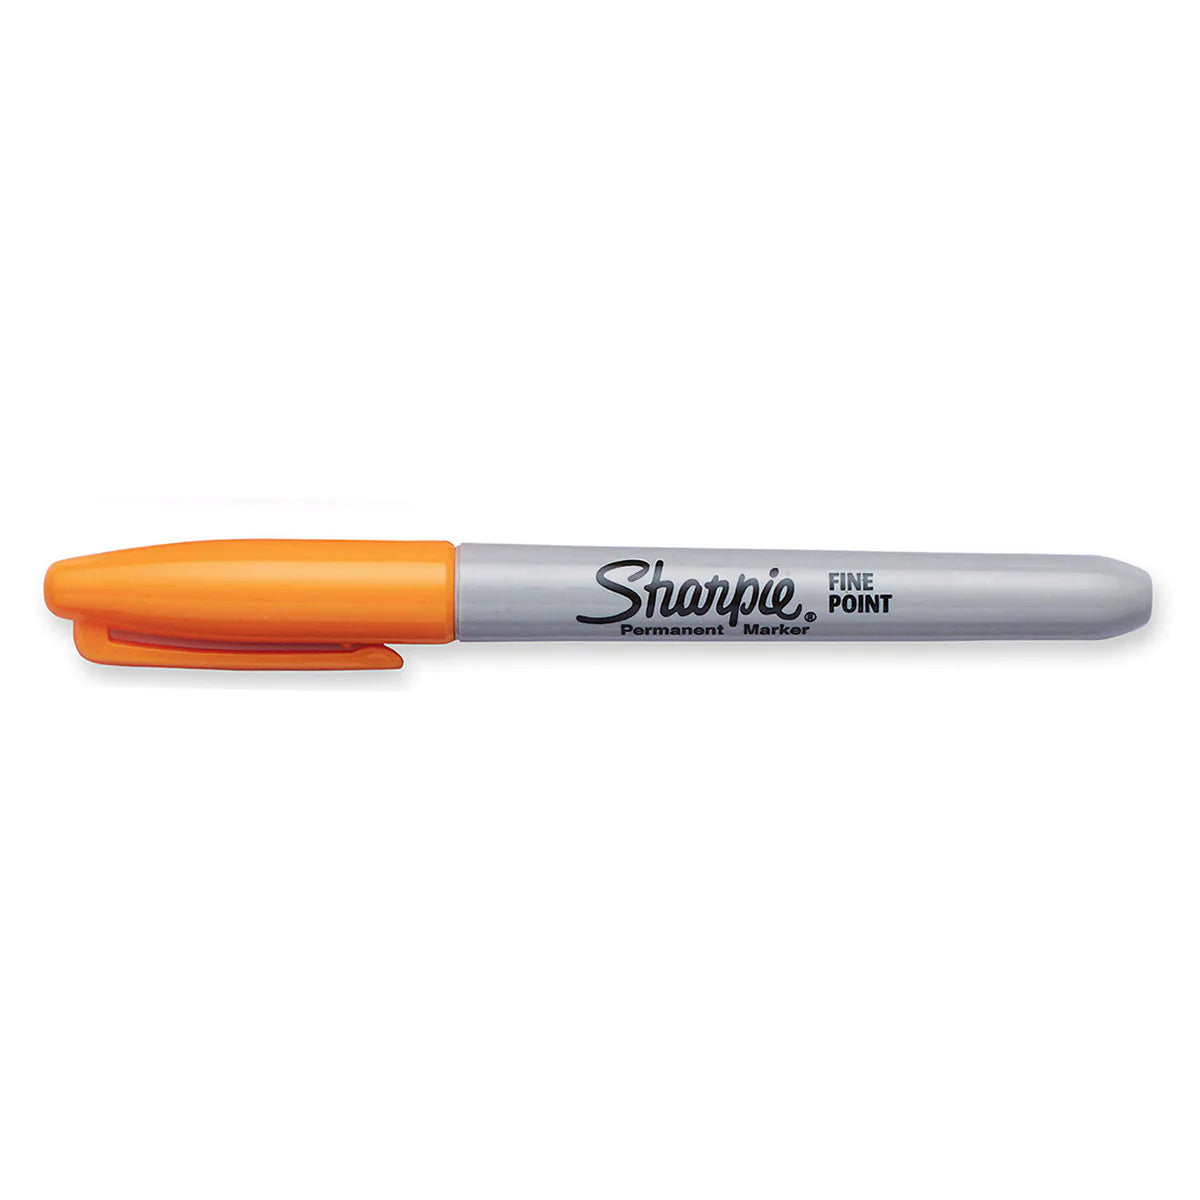 Sharpie Ultra Fine Pen - Yellow